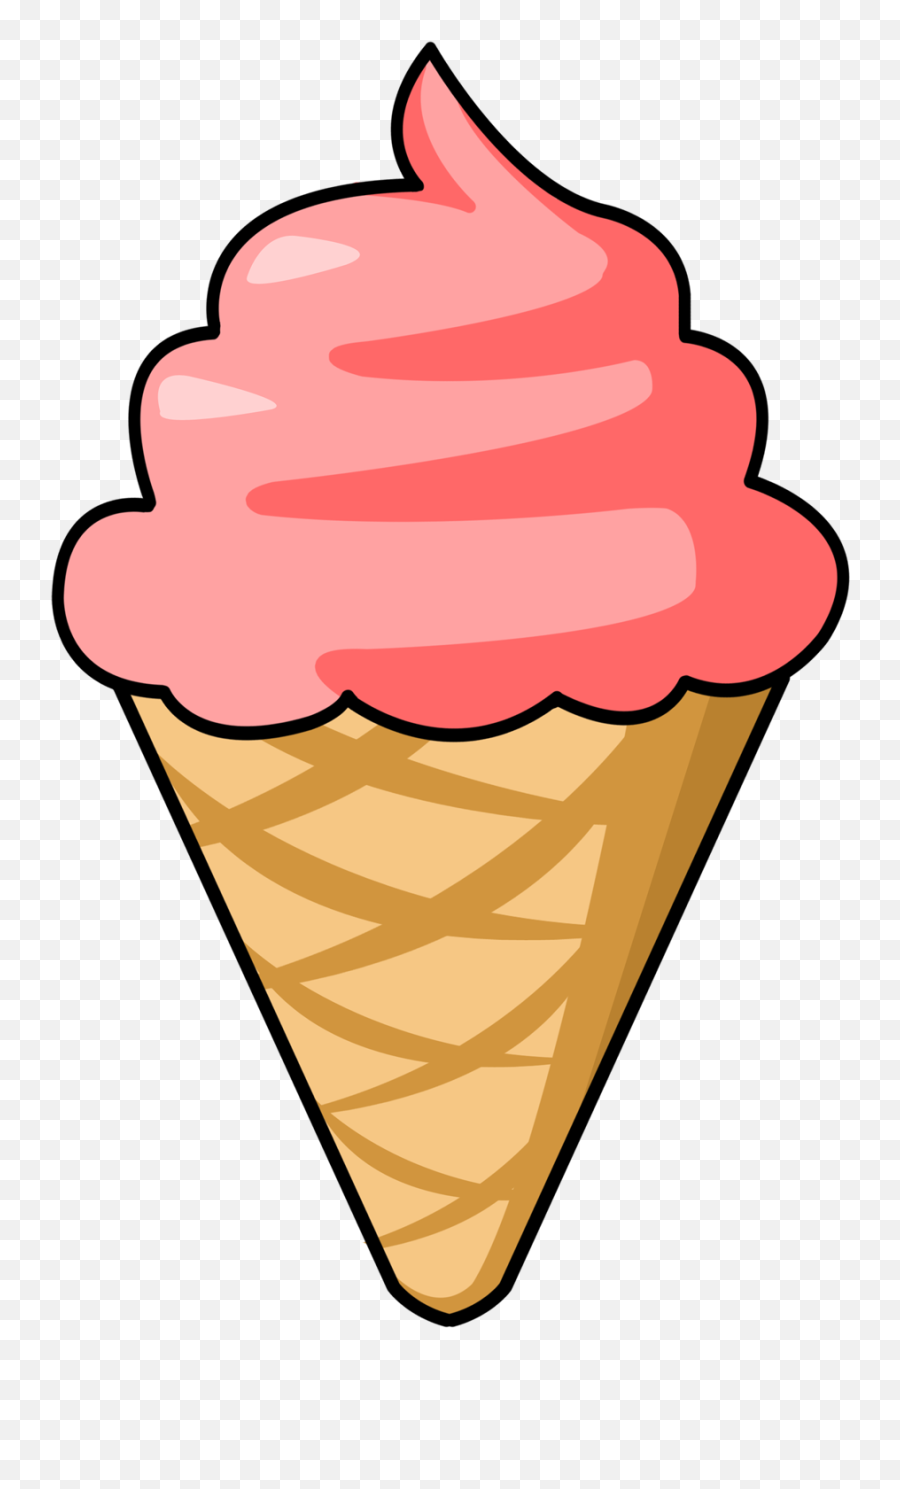 Chocolate Ice Cream Cone Clip Art Image - Clipartix Clip Art Ice Cream Cone Emoji,Chocolate Ice Cream Emoji